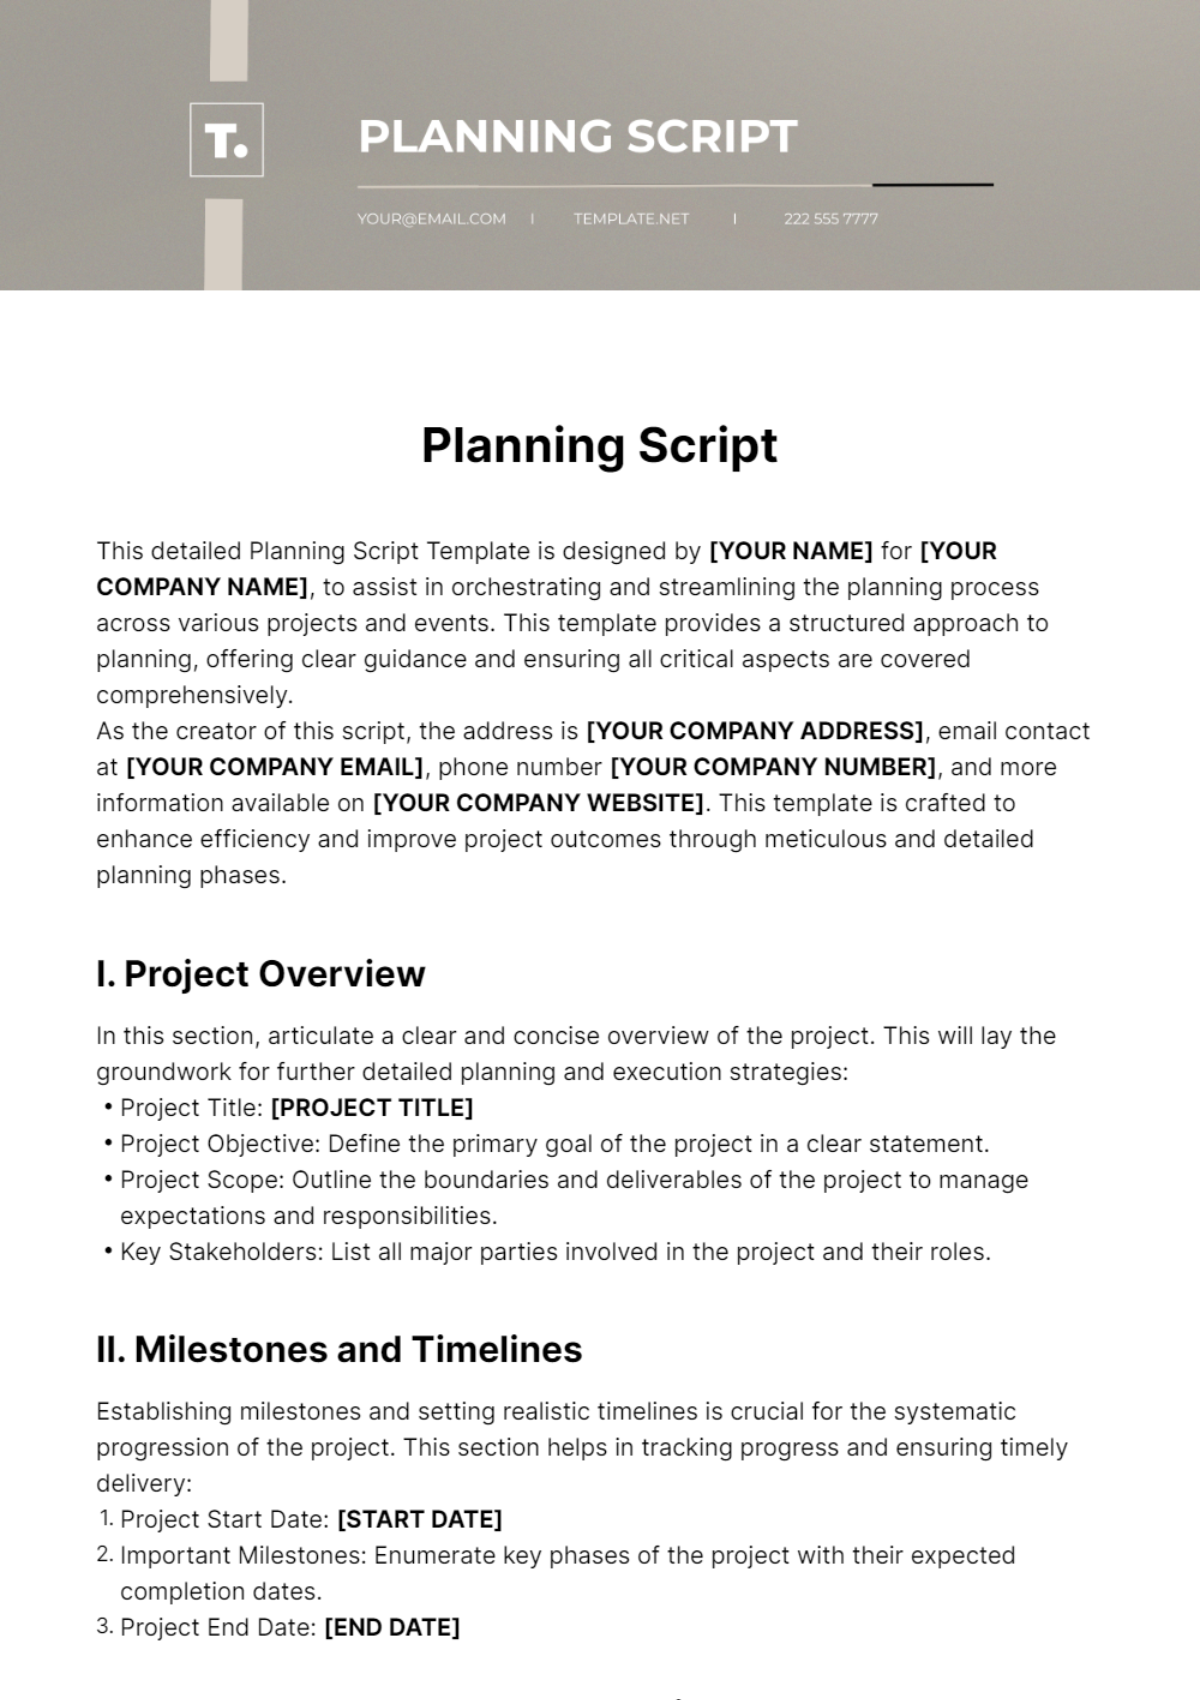 Planning Script Template